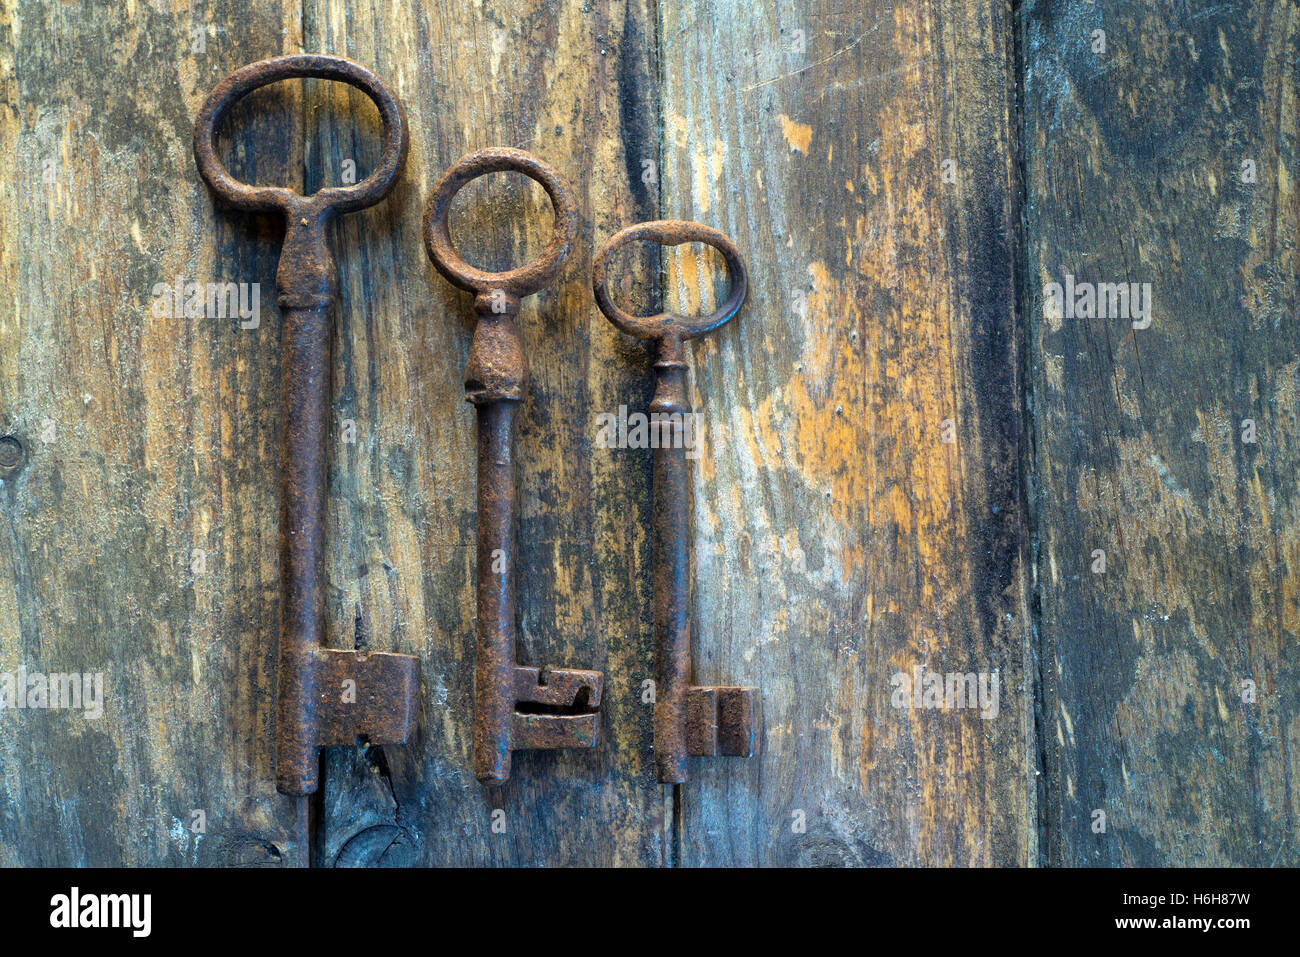 Three old keys on wooden table Stock Photo